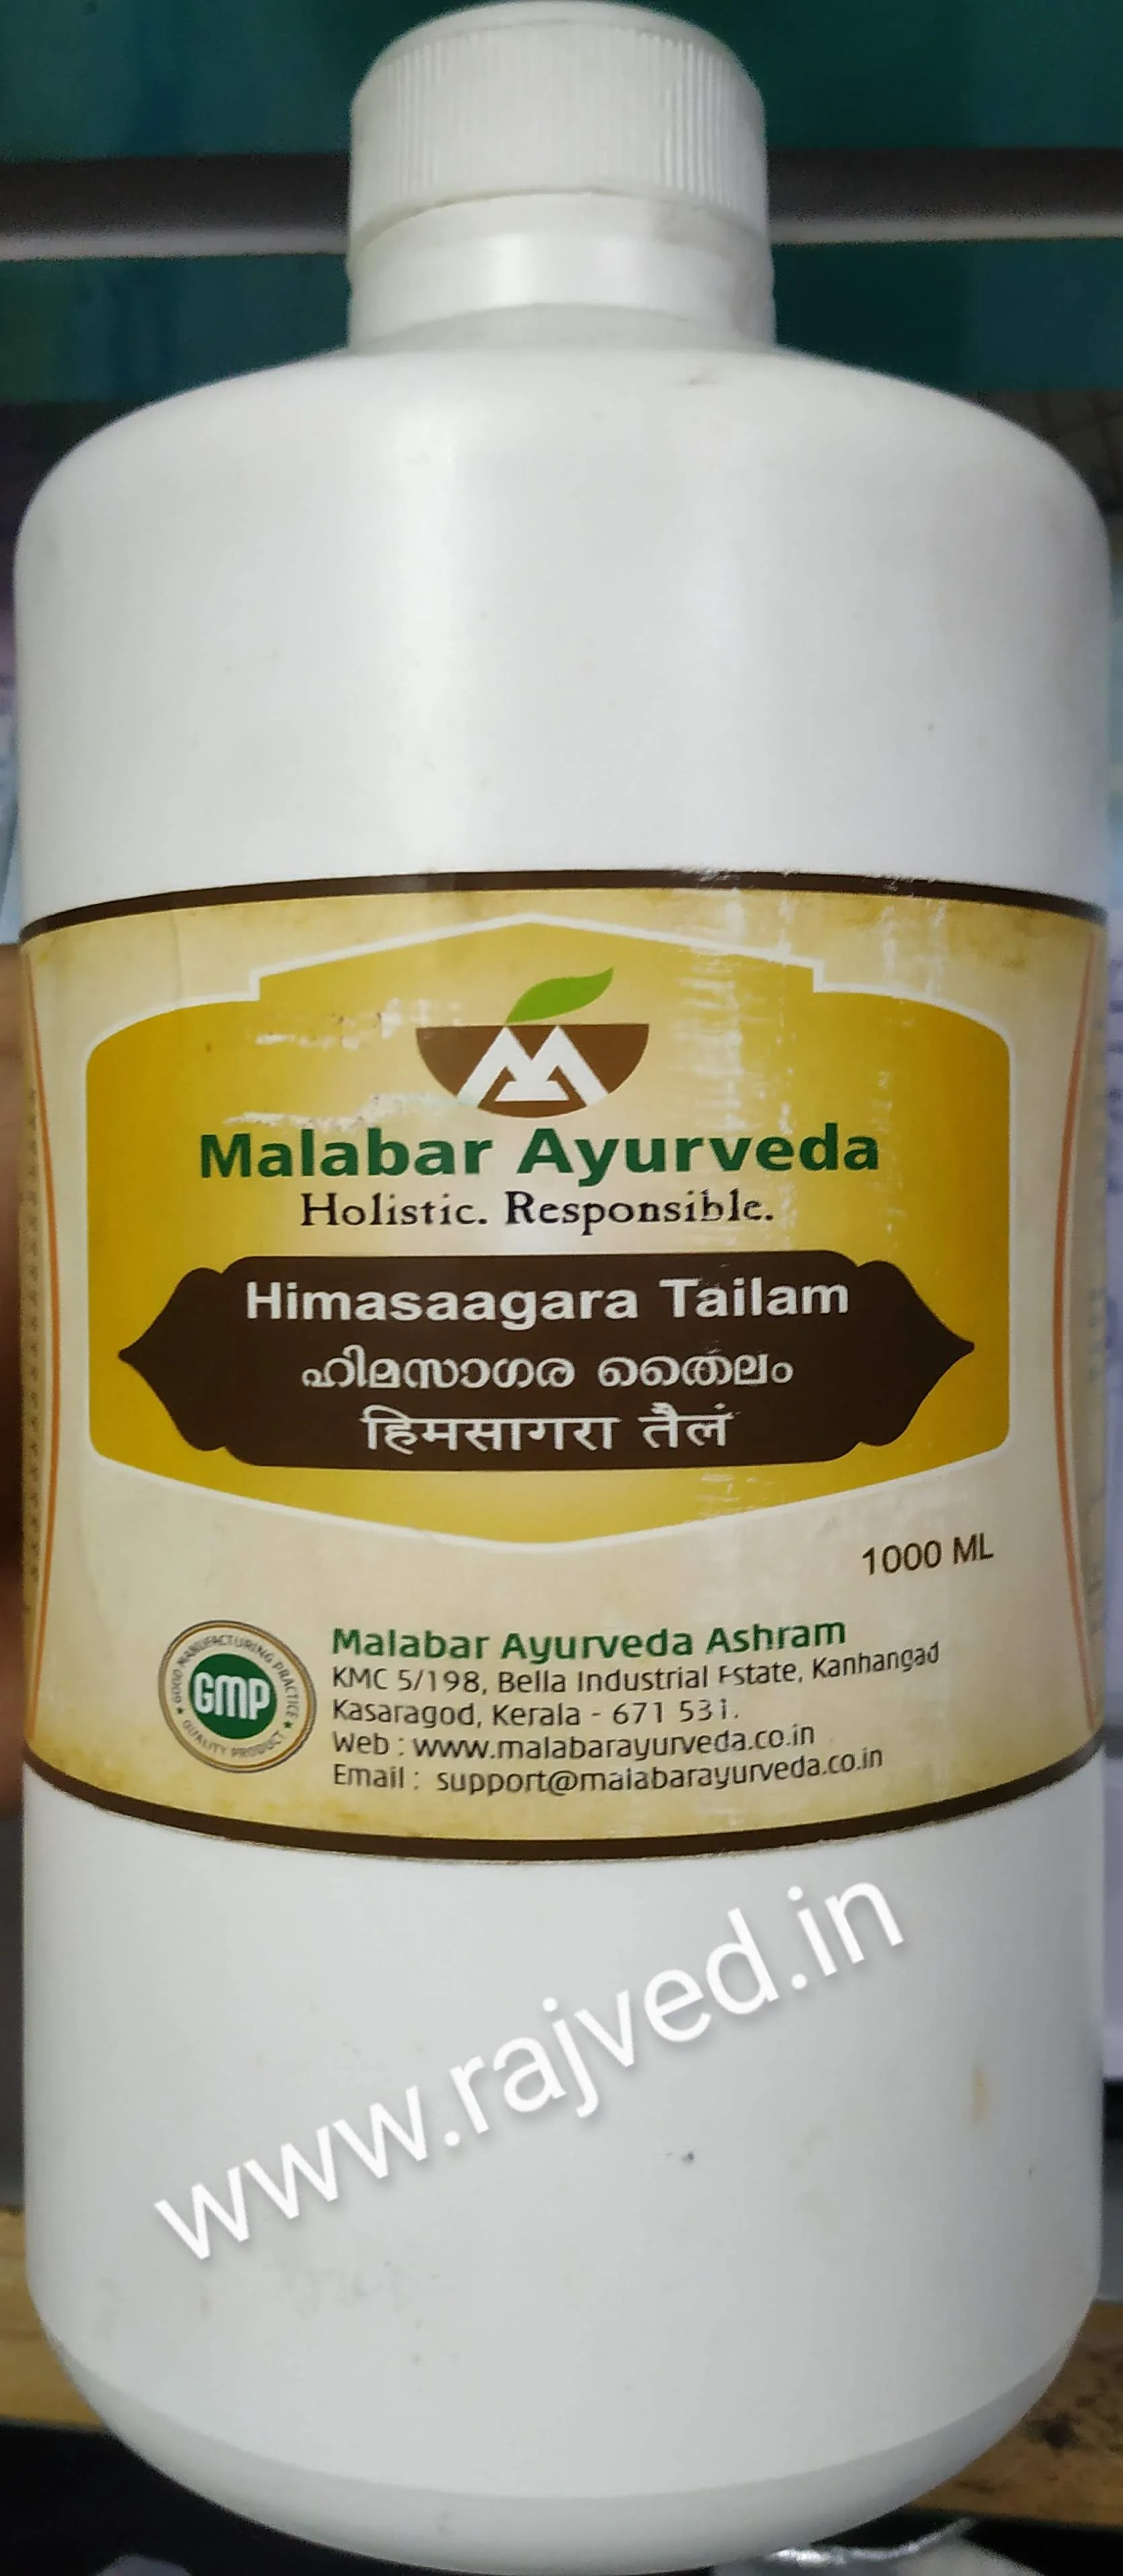 himasagara tailam 1000 ml upto 15% off malabar ayurveda ashram